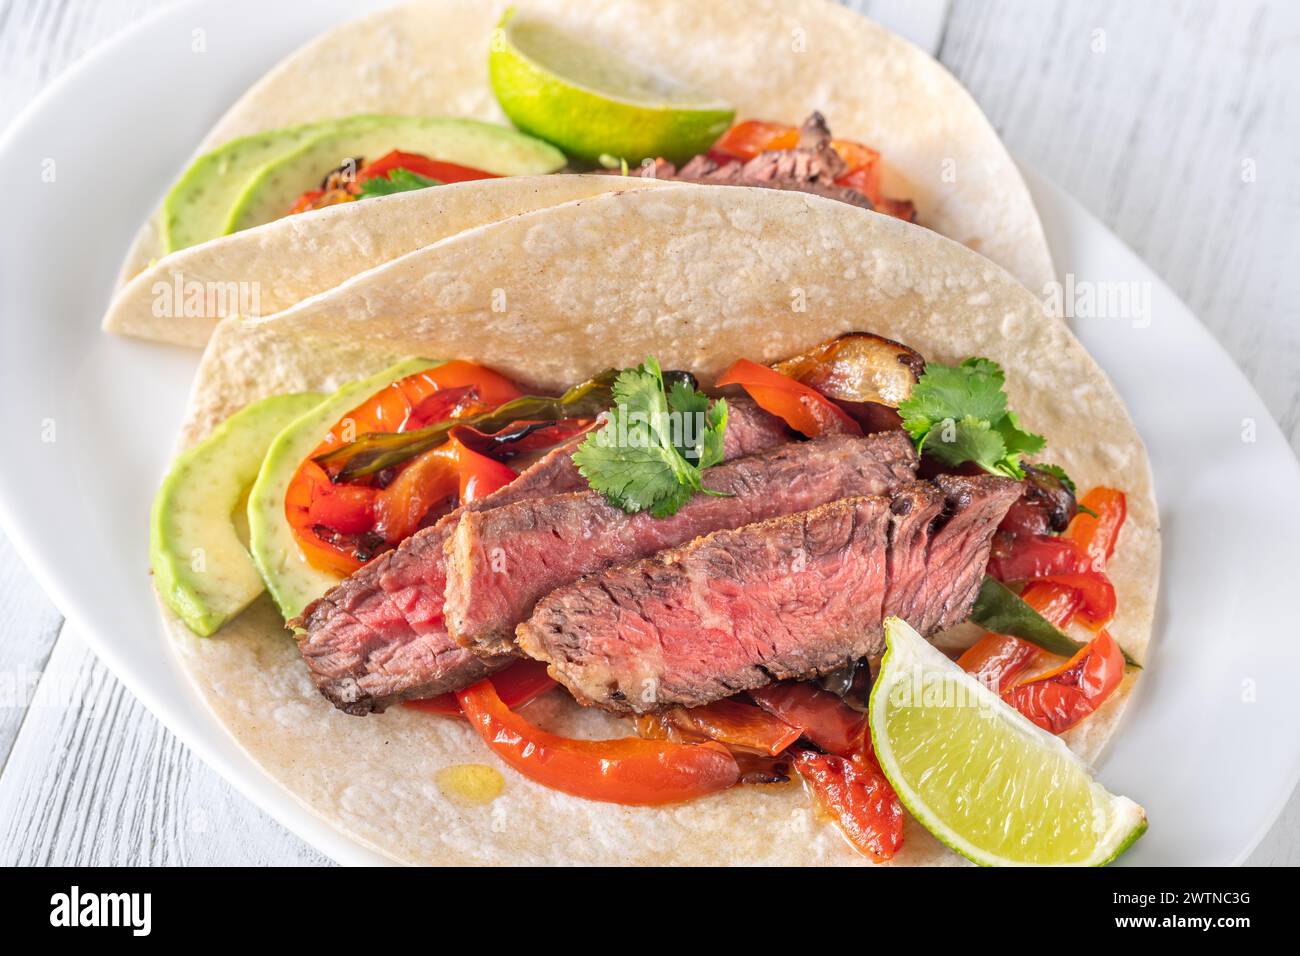 Mexican beef steak fajitas on the plate Stock Photo